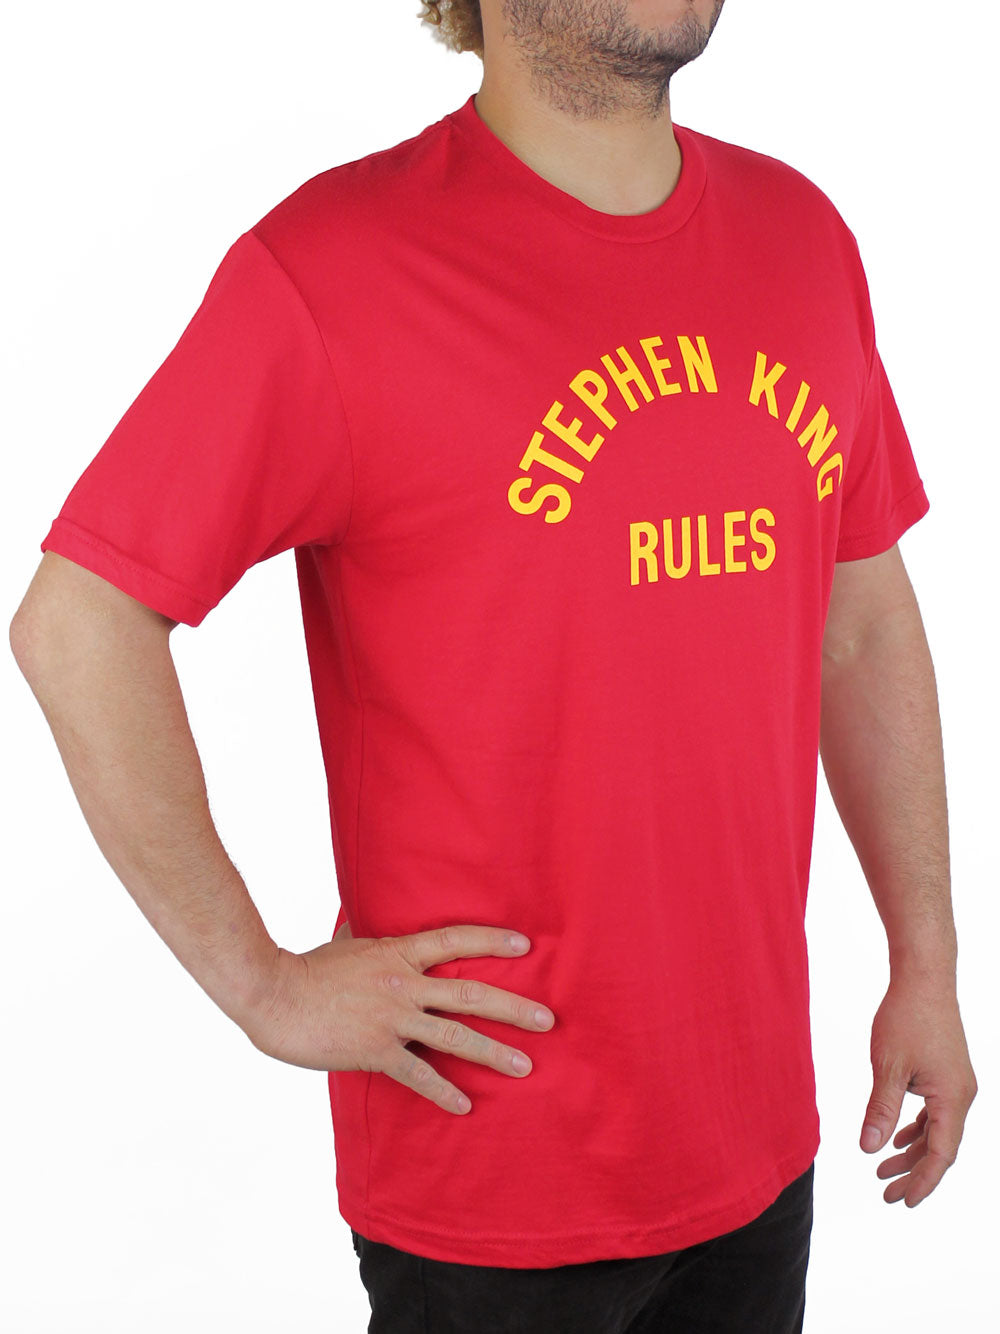 Stephen King Rules Shirt 3/4 View